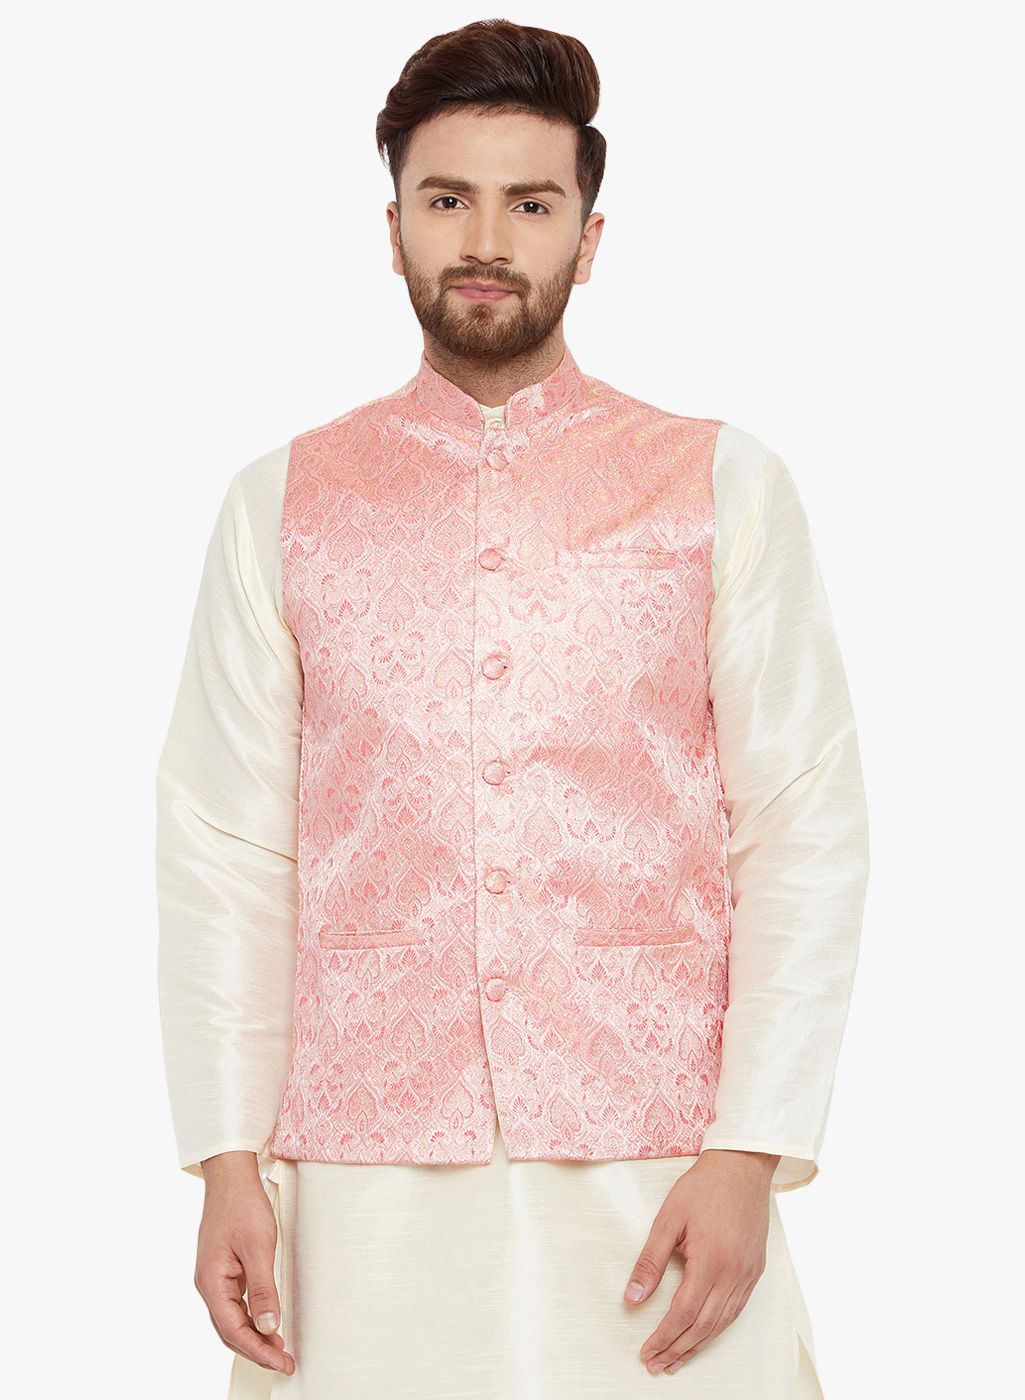 Ethnic Jackets Online - Buy Men Ethnic Jackets Online in India | Jabong.com